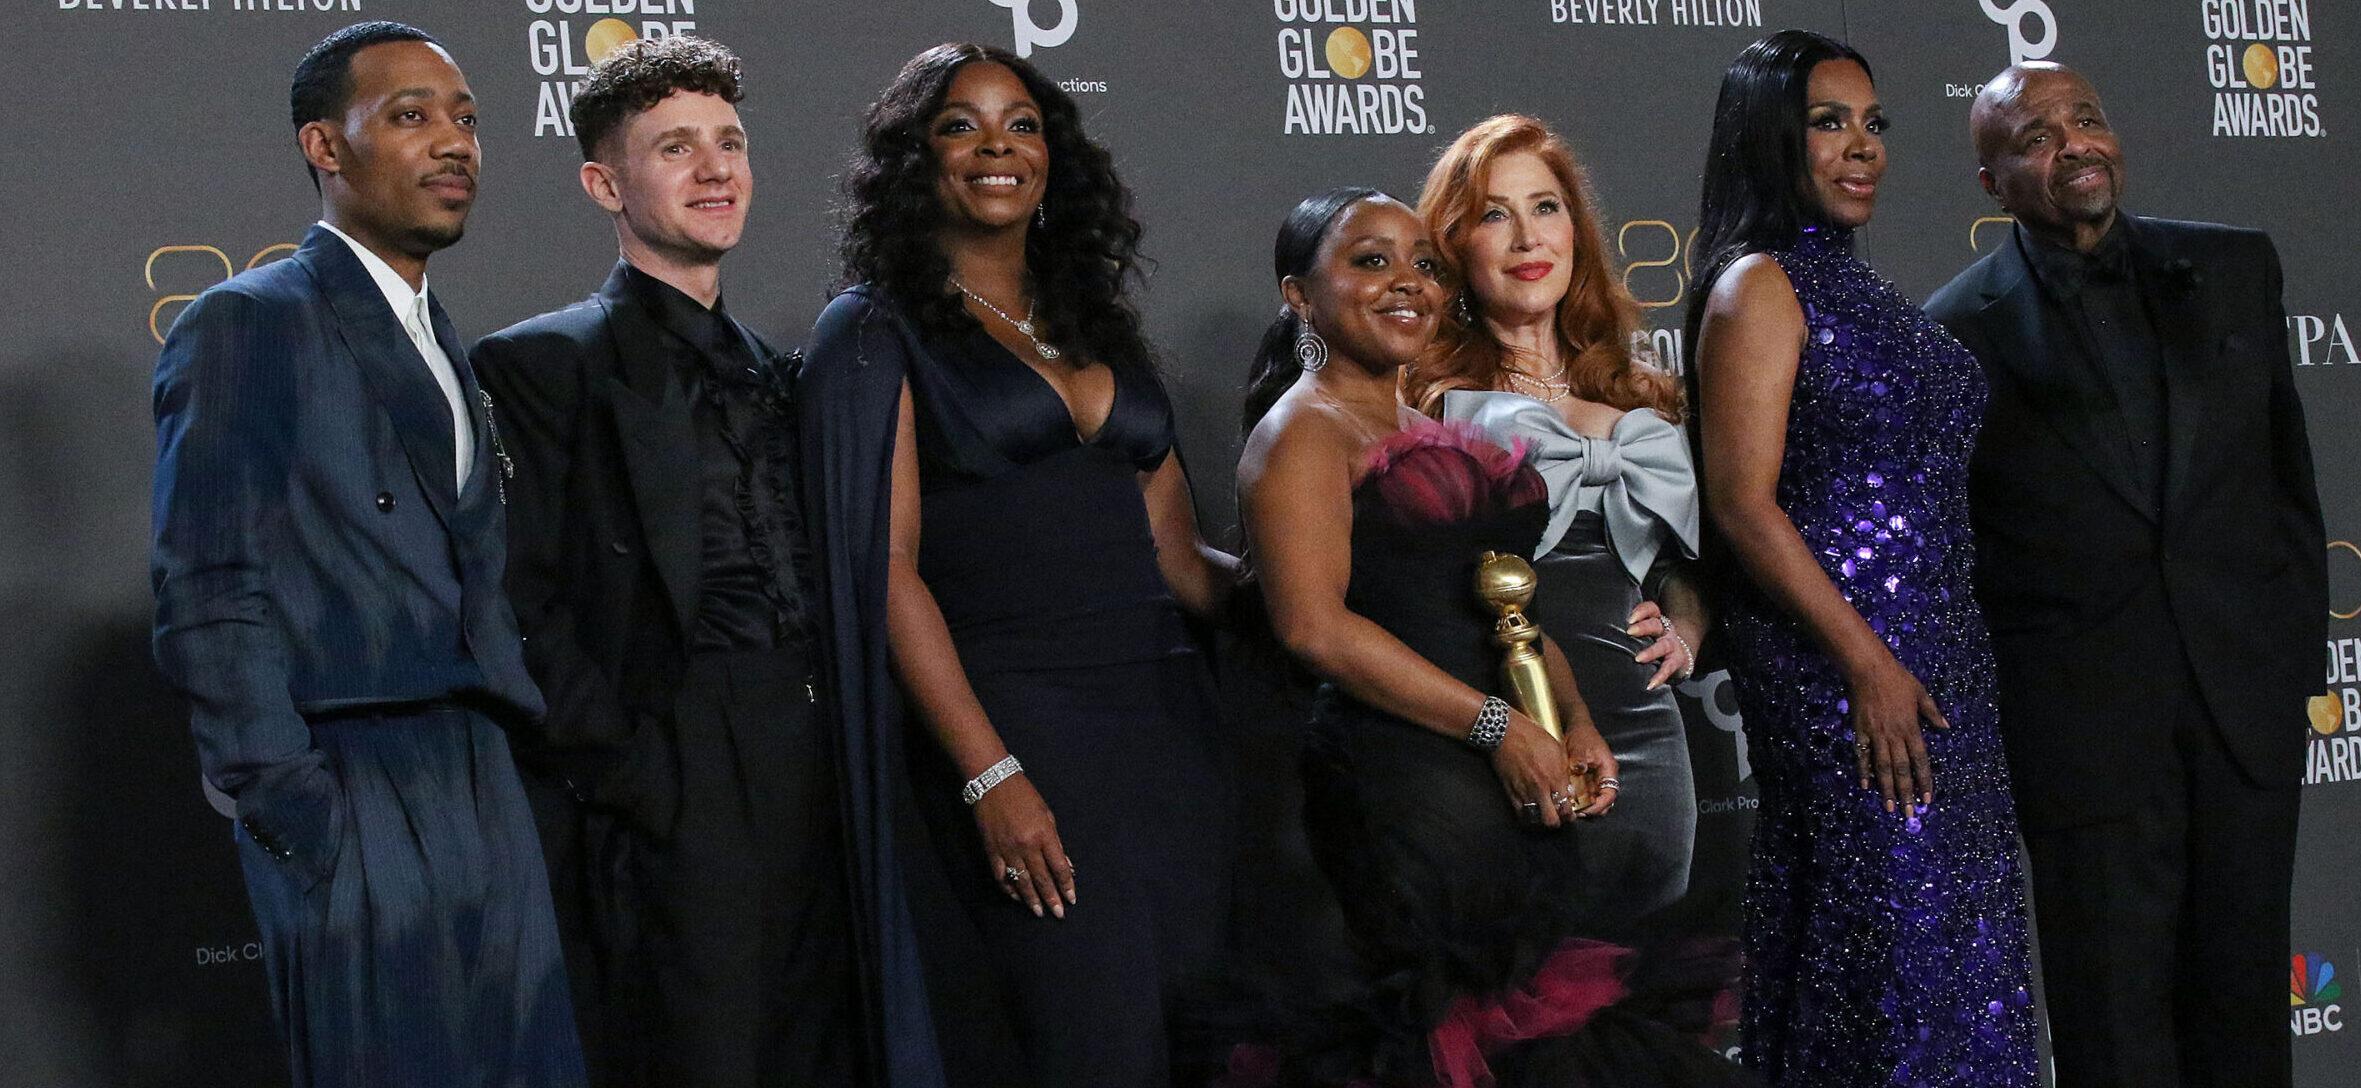 'Abbott Elementary' cast at the 80th Annual Golden Globe Awards